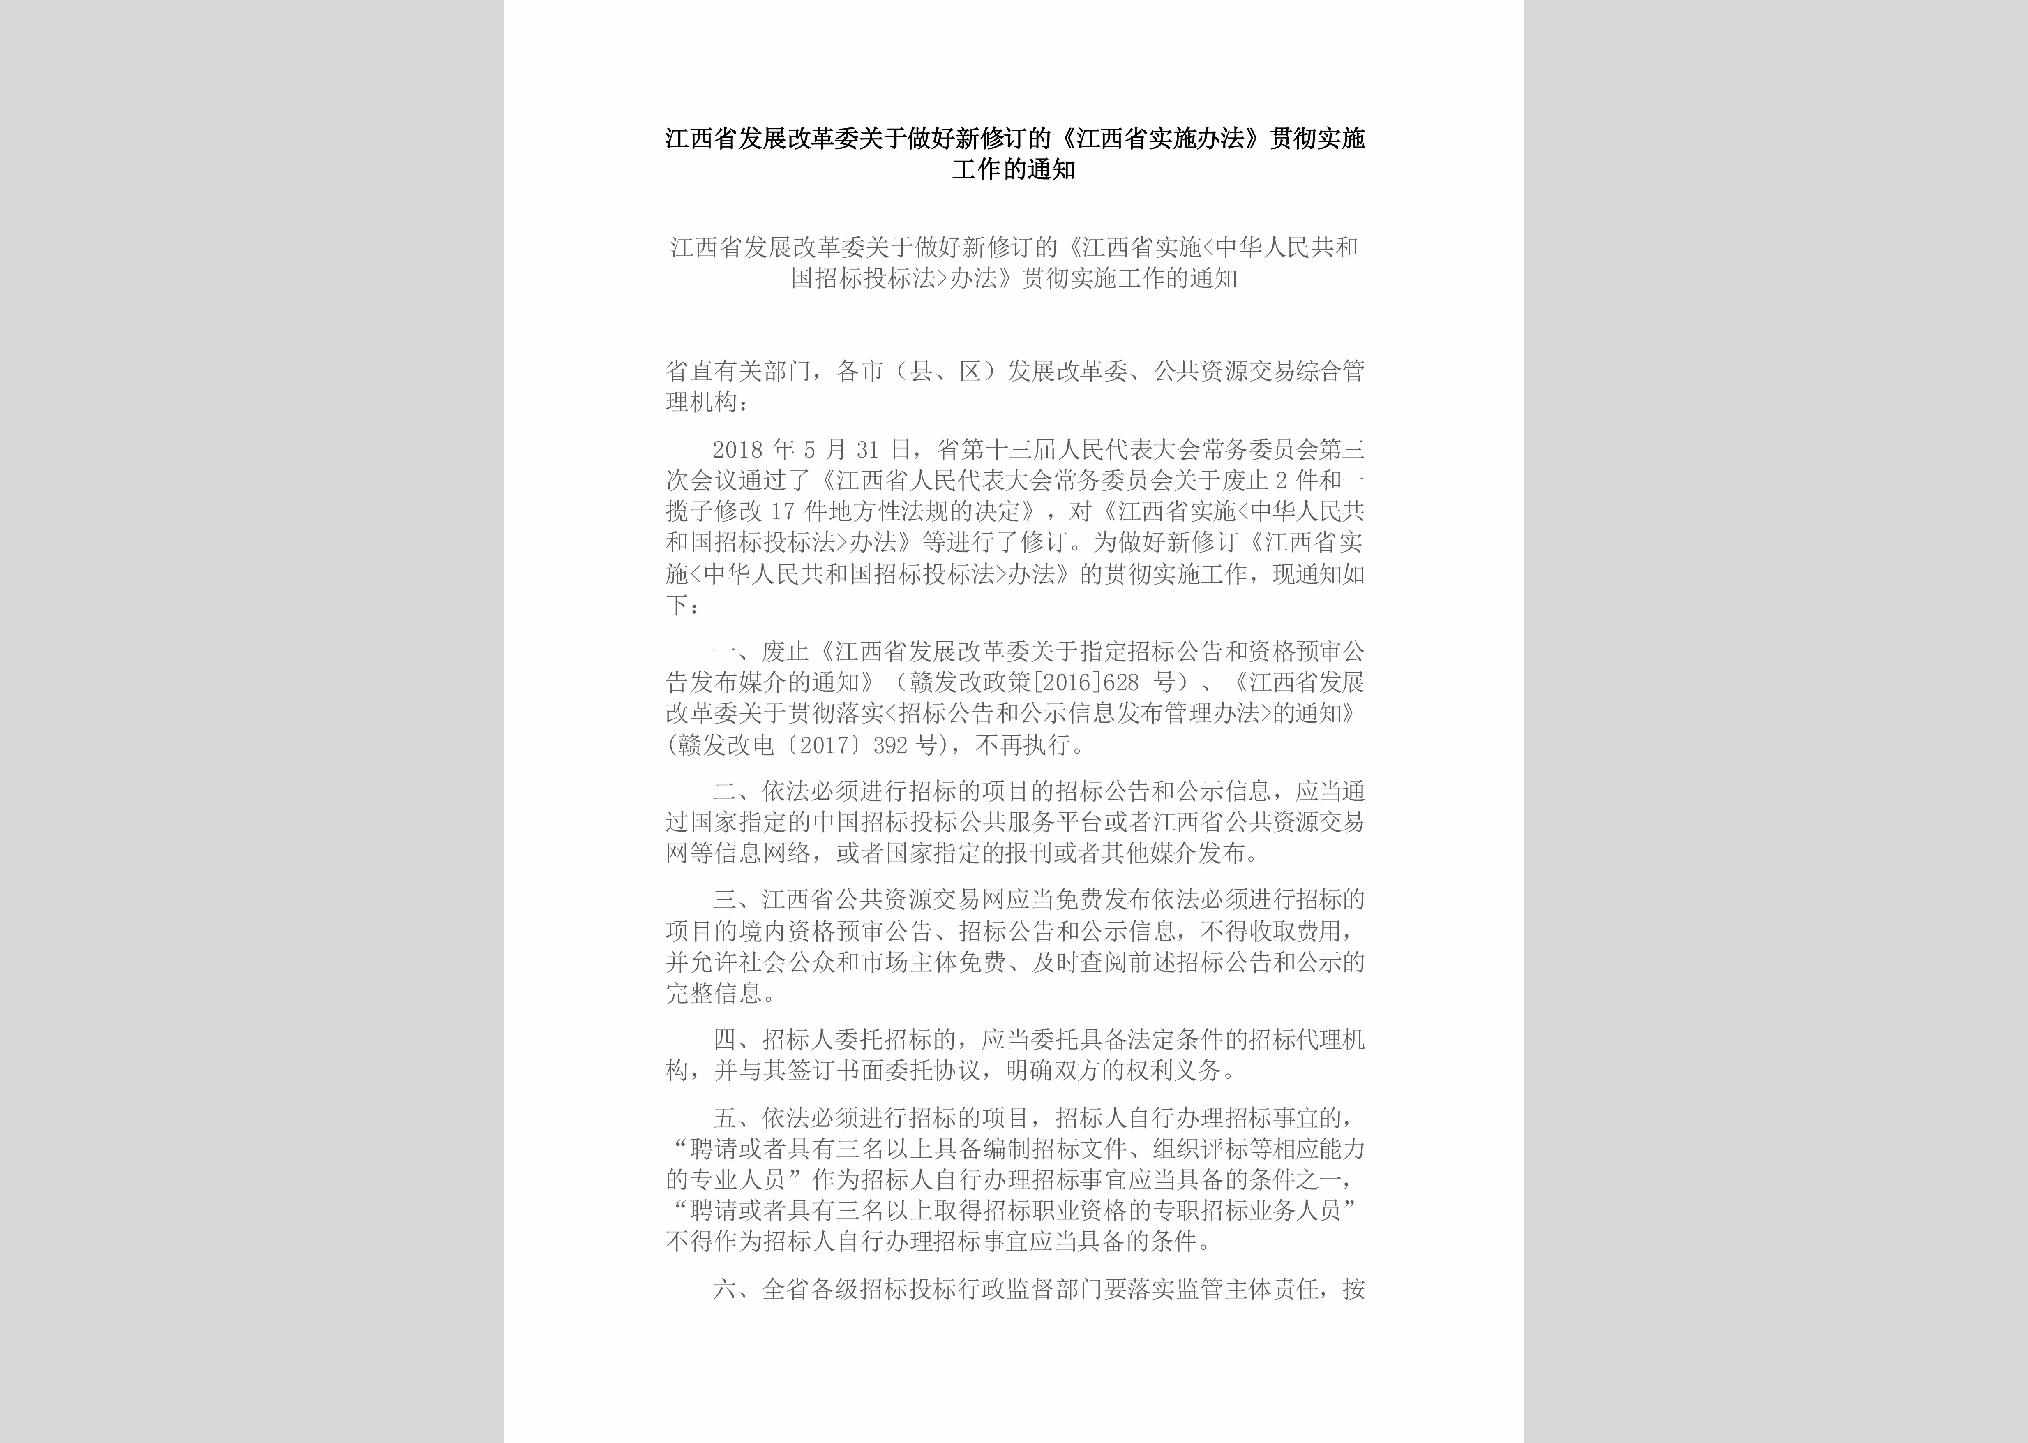 JX-GCSSGZSS-2018：江西省发展改革委关于做好新修订的《江西省实施办法》贯彻实施工作的通知